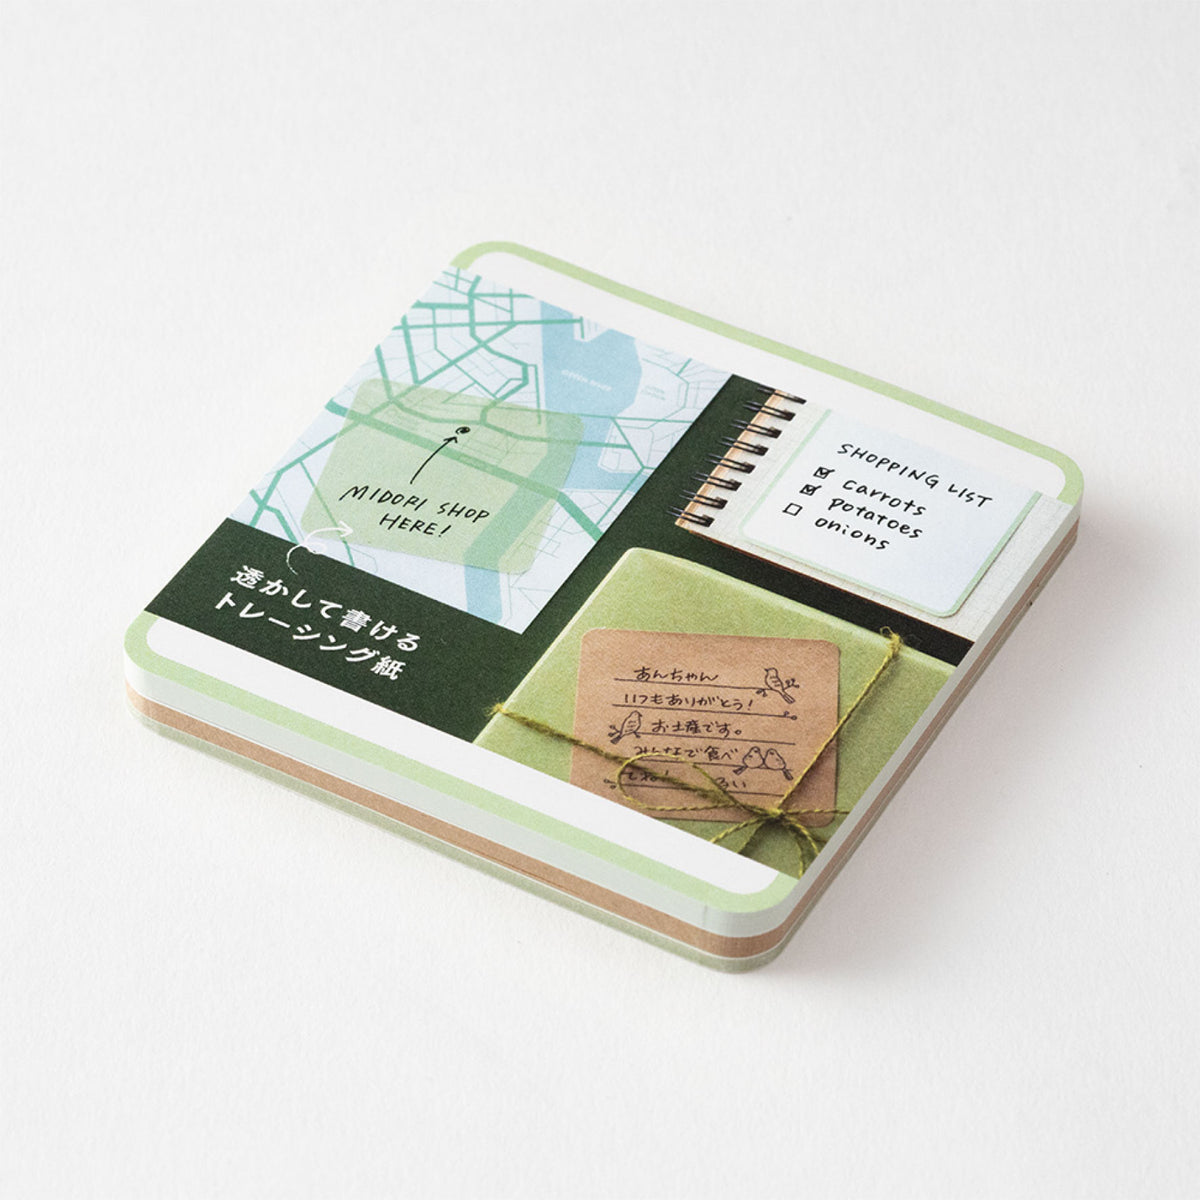 Midori - Notepad - Sticky Notes - Green